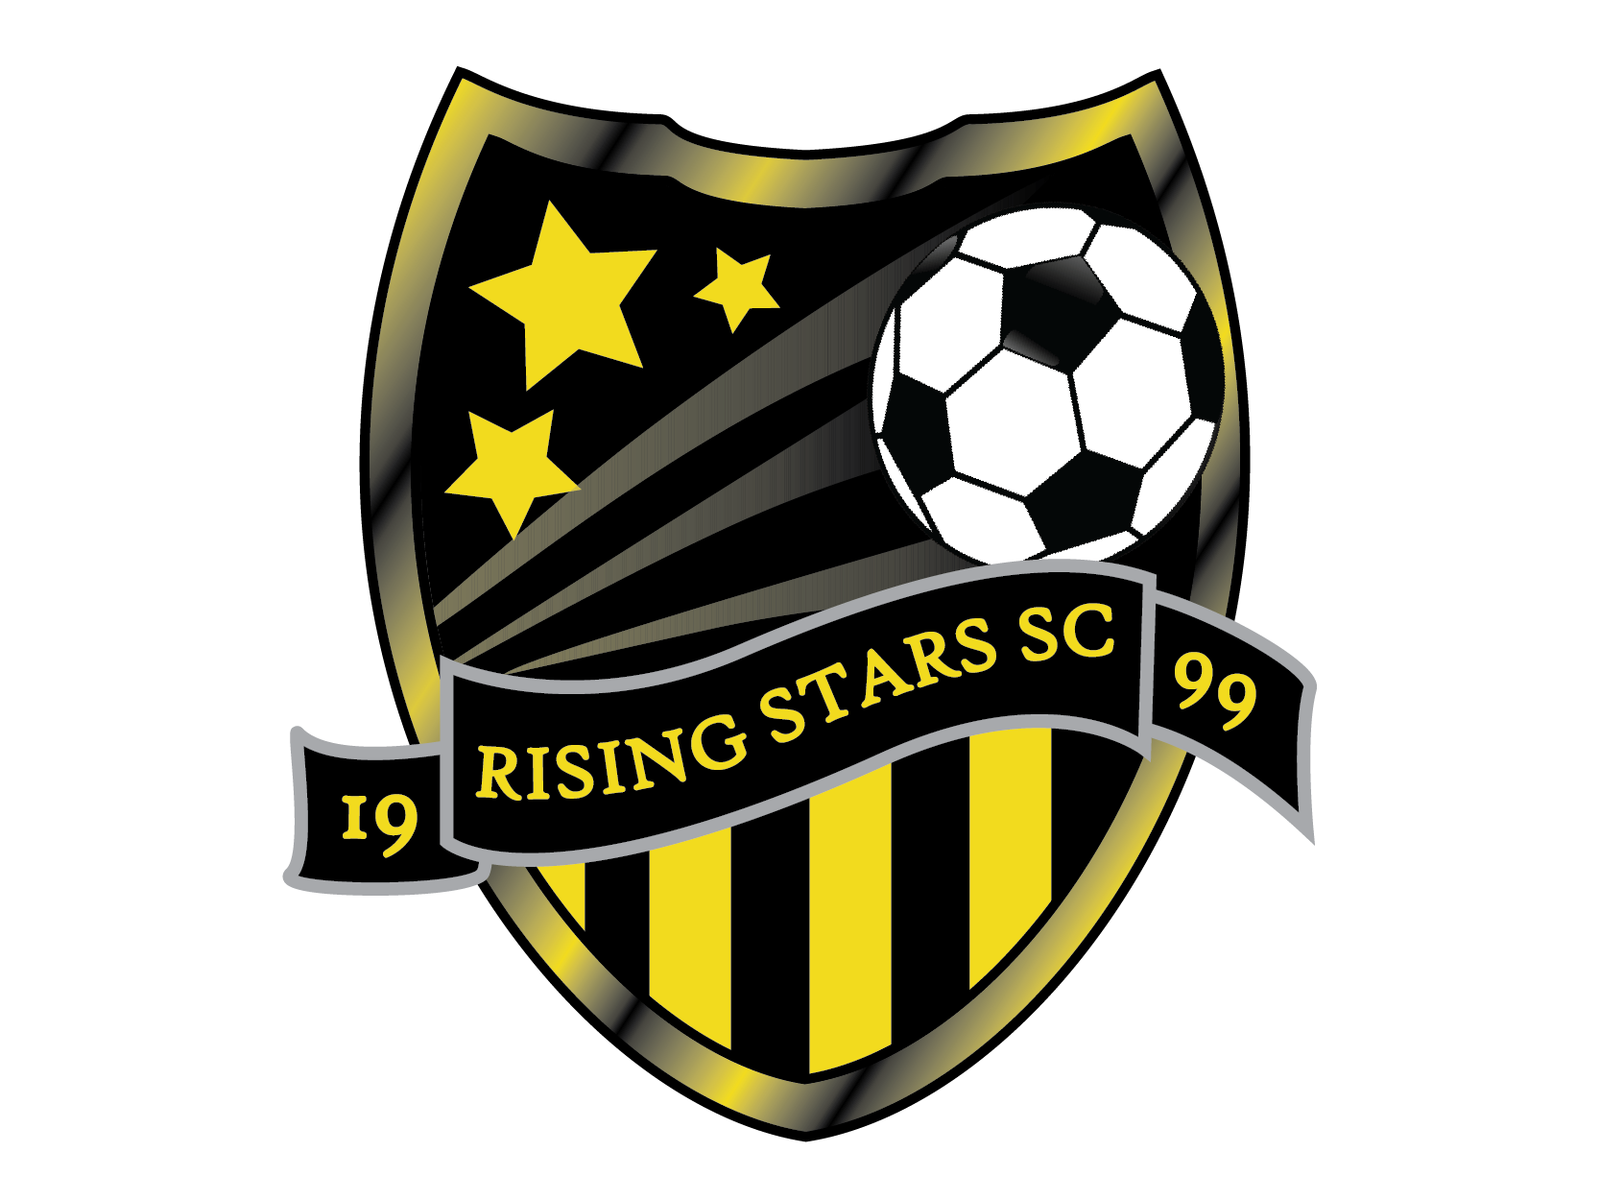 Rising Stars Soccer Club Logo by Susan Moshier on Dribbble